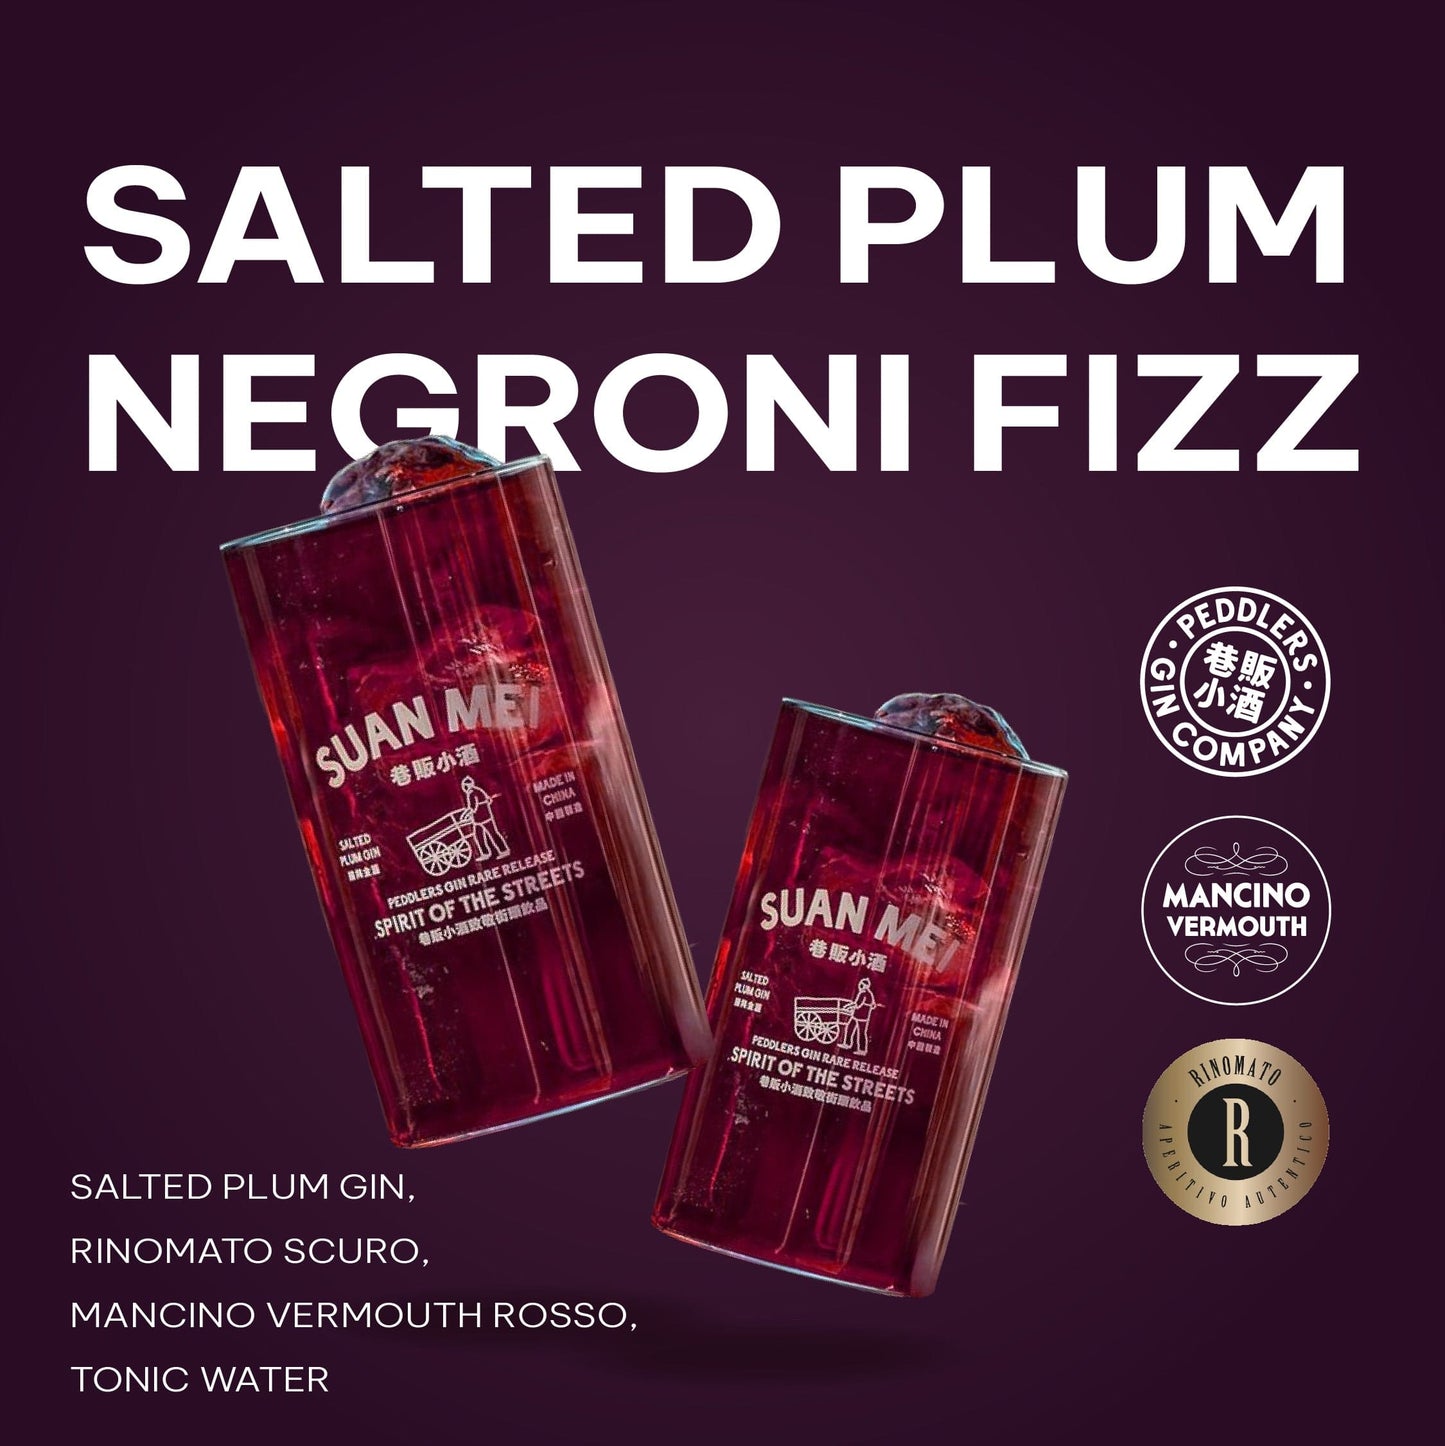 Salted Plum Peddlers Negroni Fizz Bundle